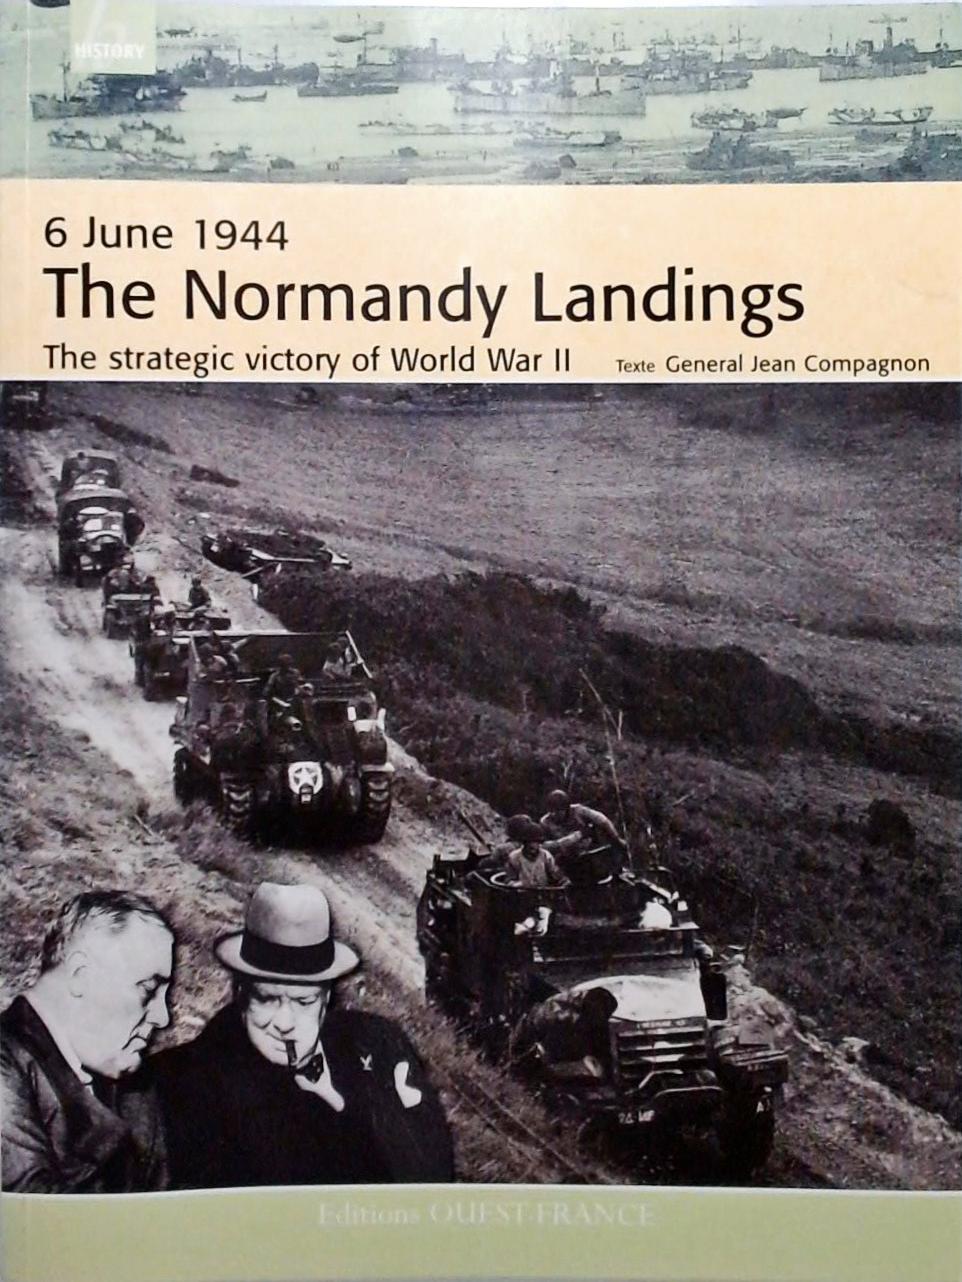 6 june 1944 - The Normandy Landings